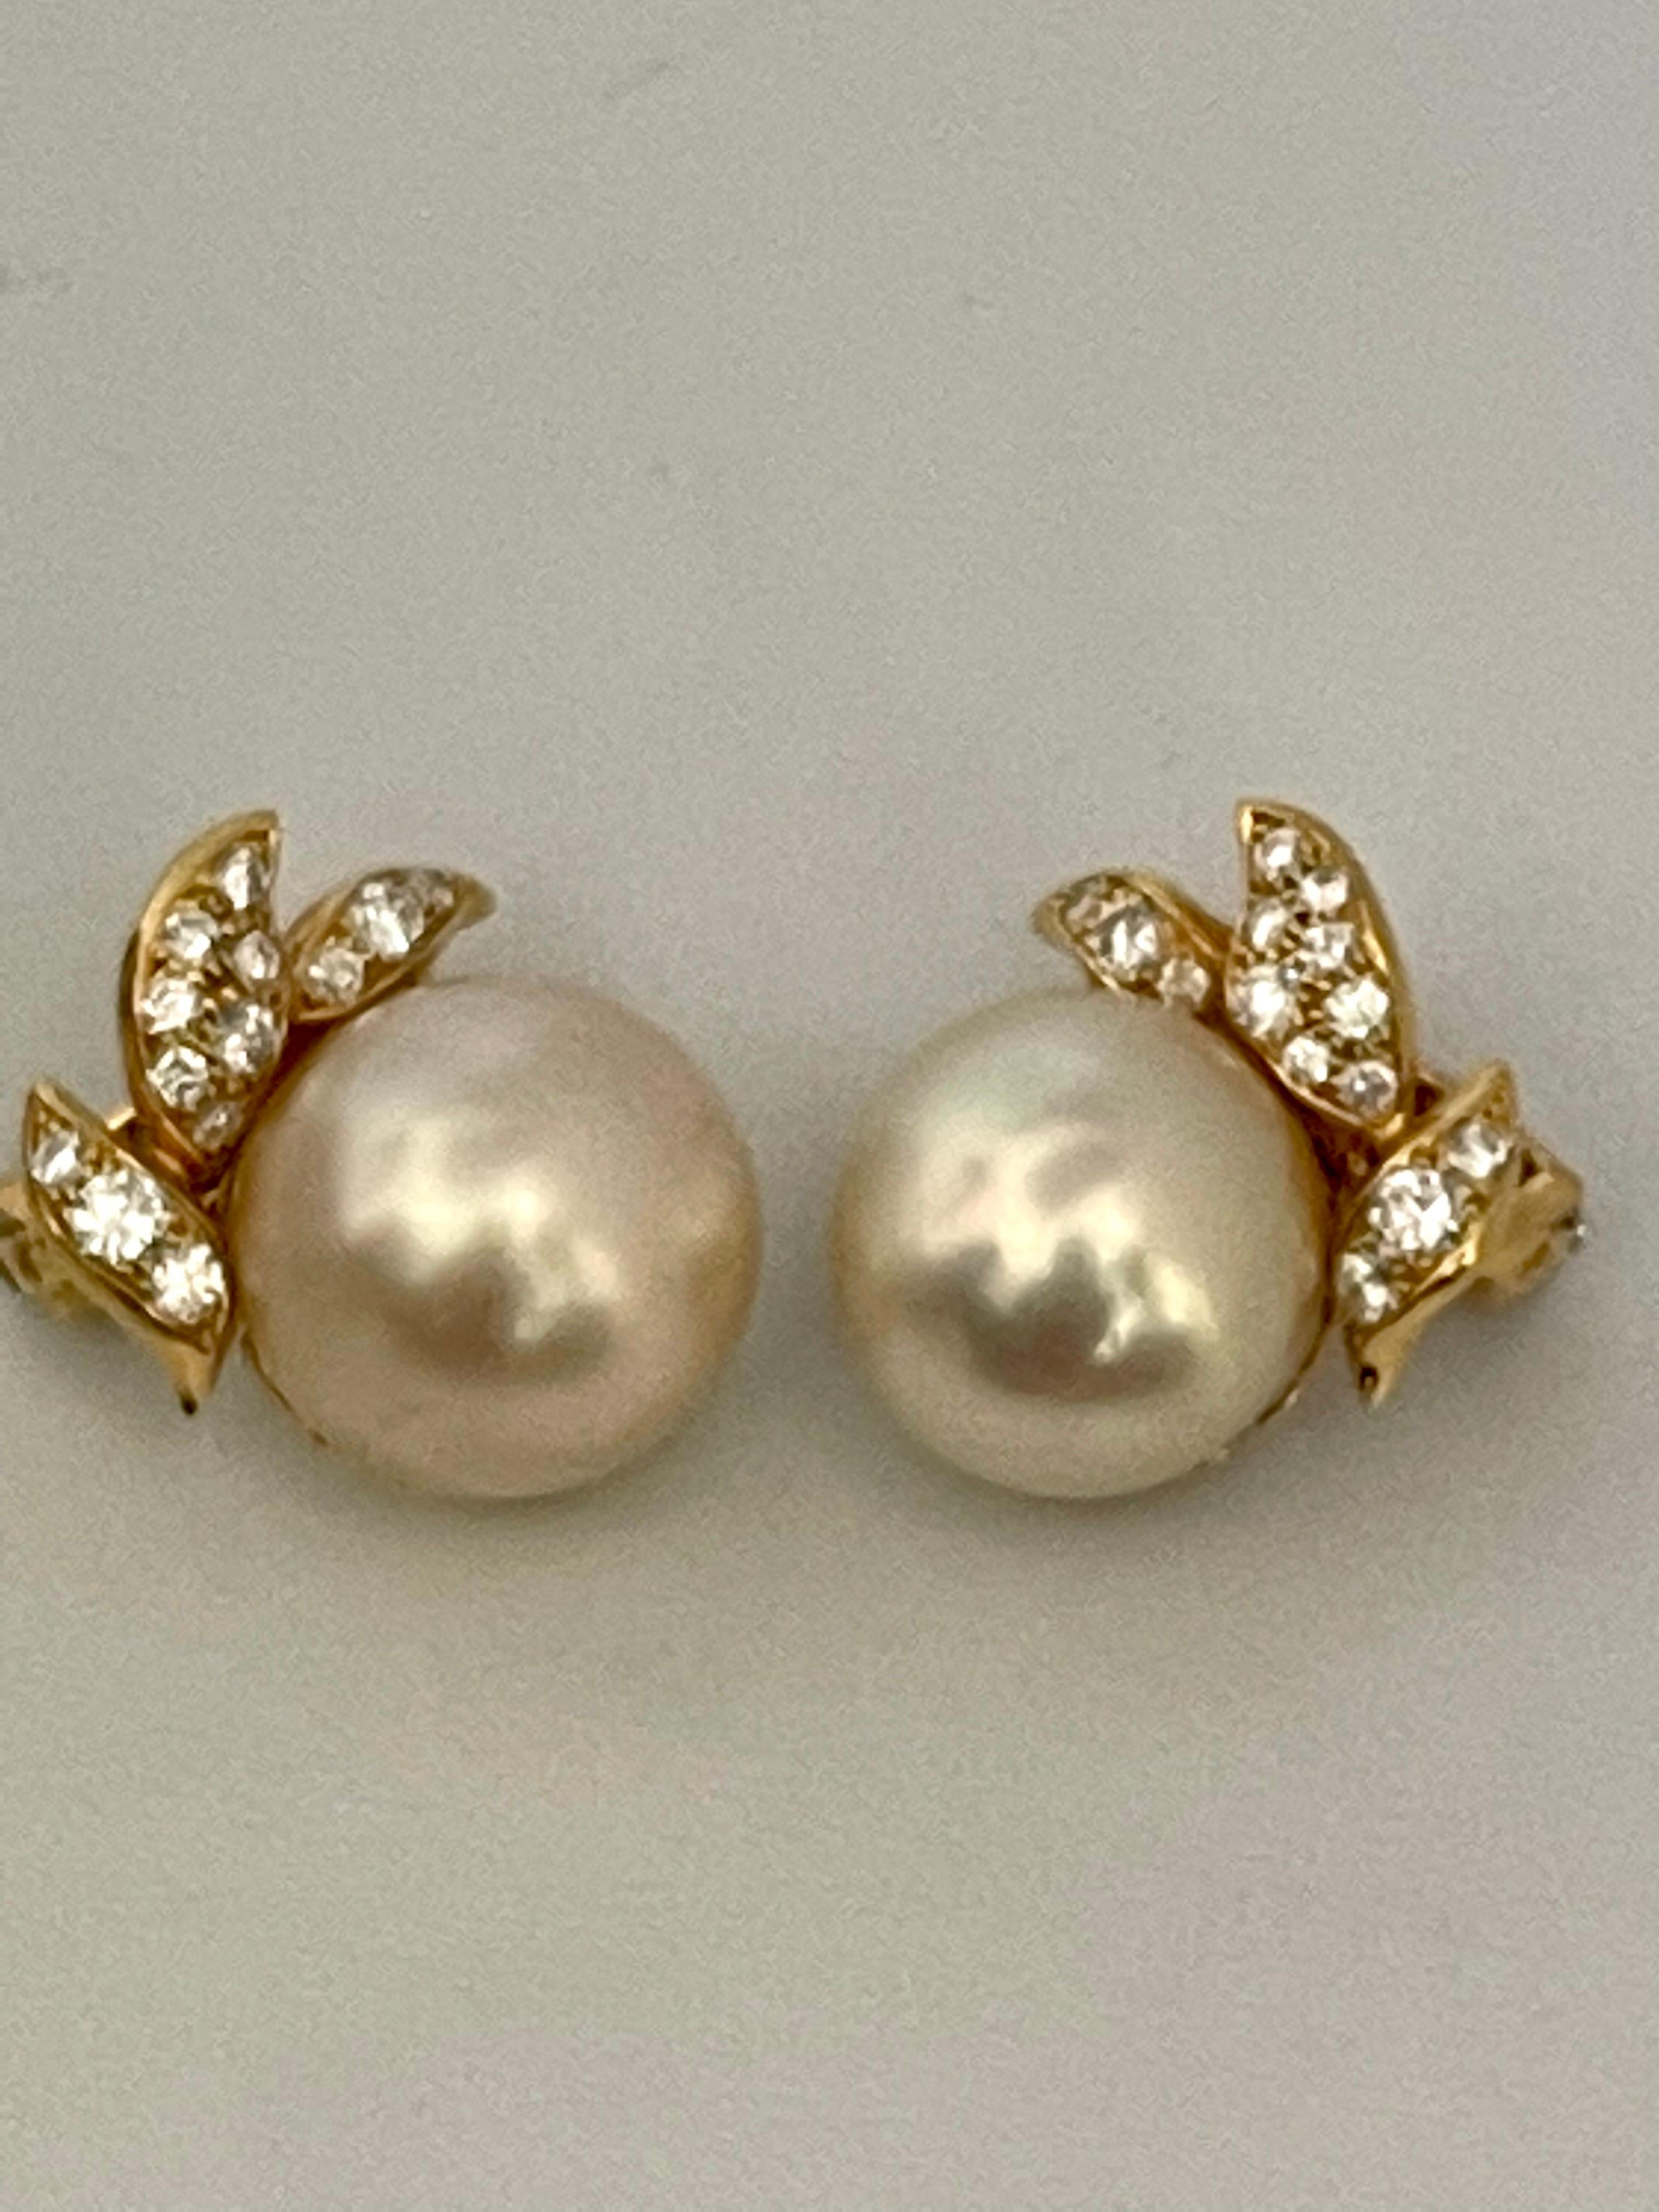 Designer A.Reza's Cream South Sea Pearl & Dimond Stud Earrings 18 K Yellow Gold 10